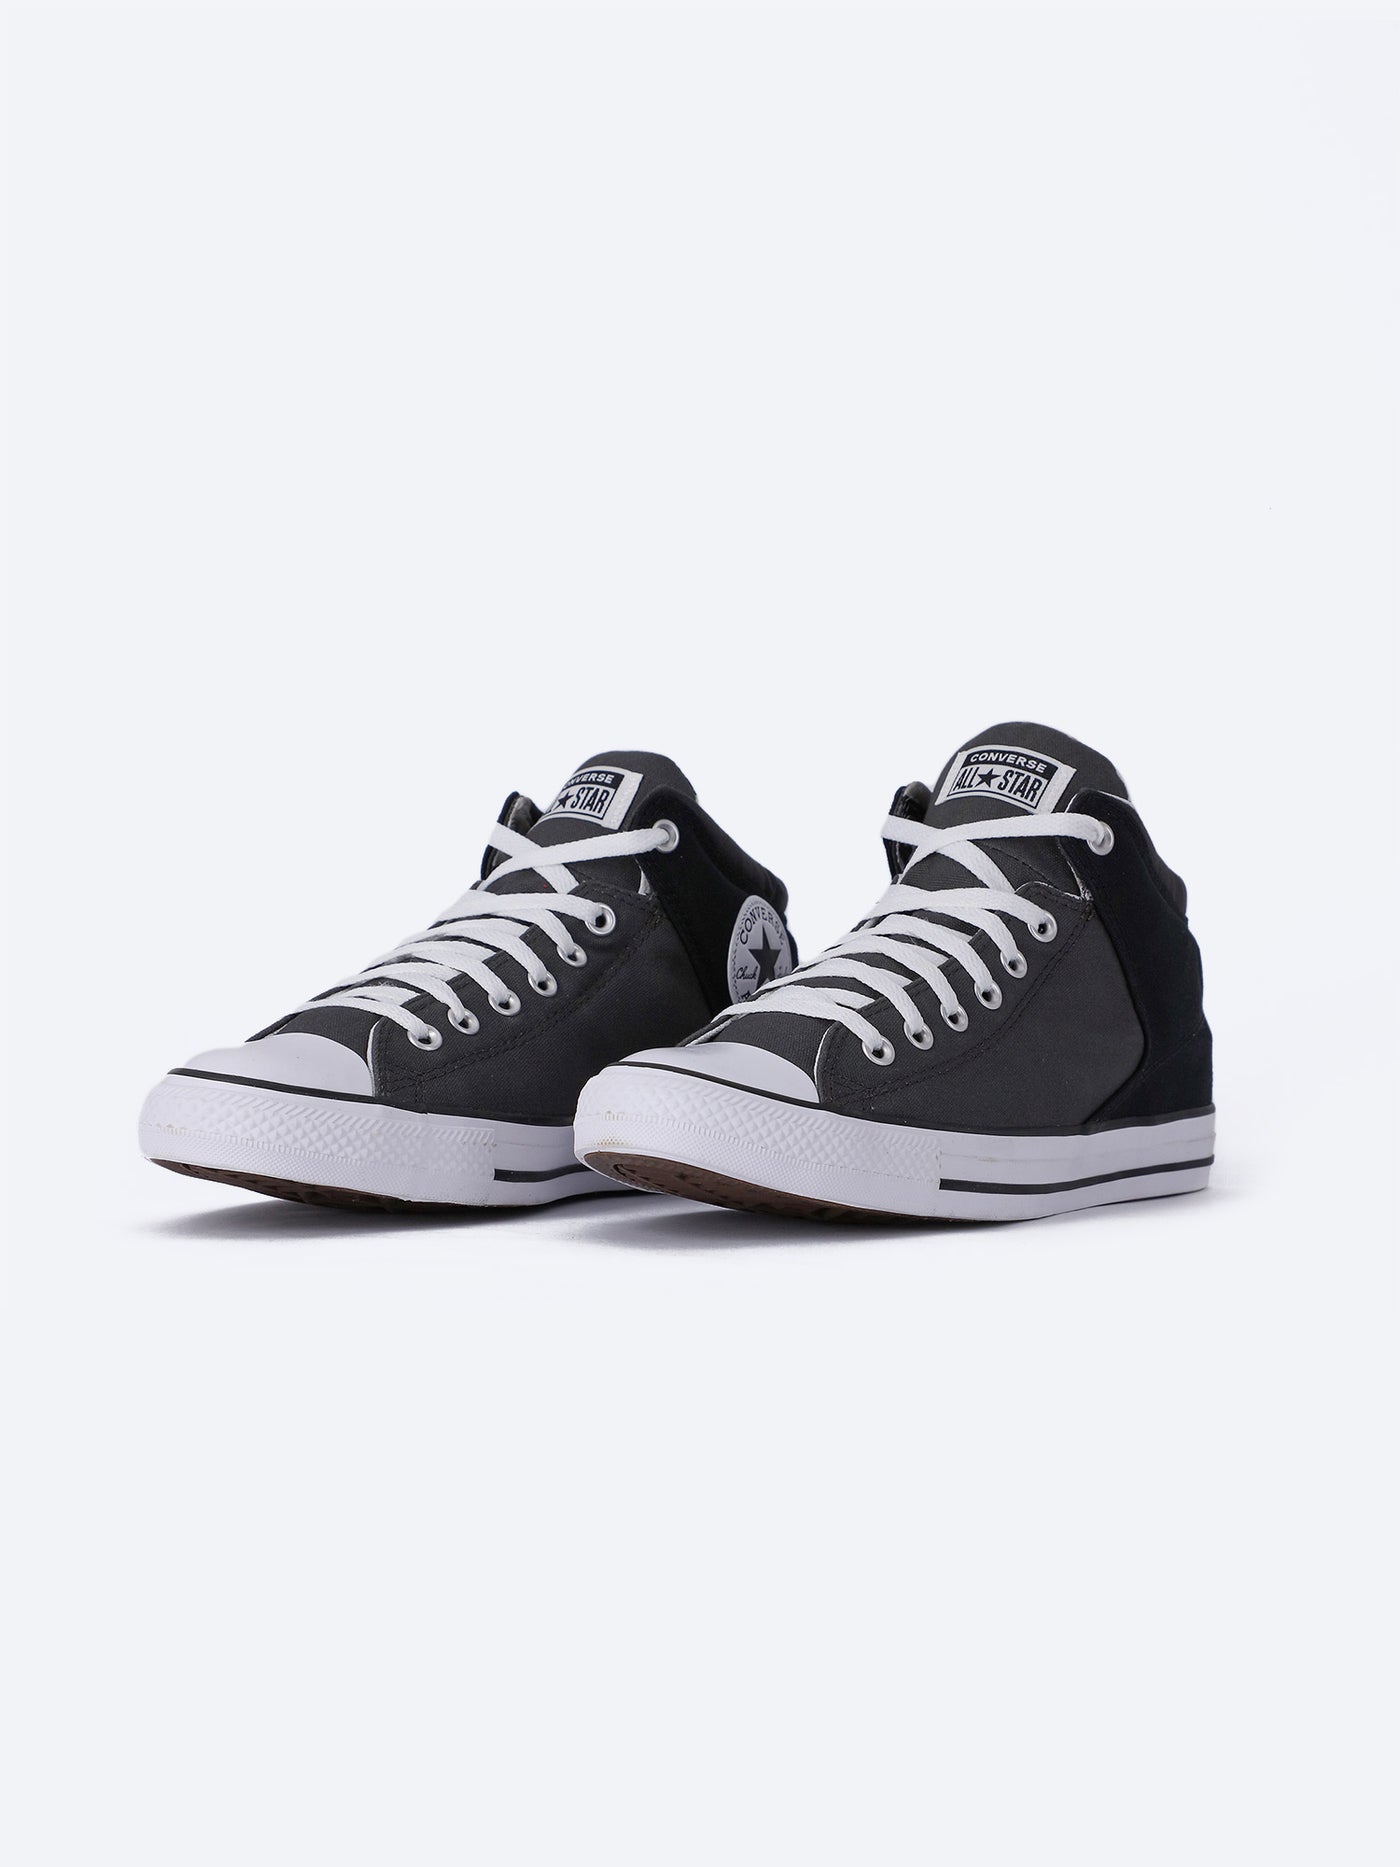 Converse Men's High Street Hybrid Camo Sneaker Shoes